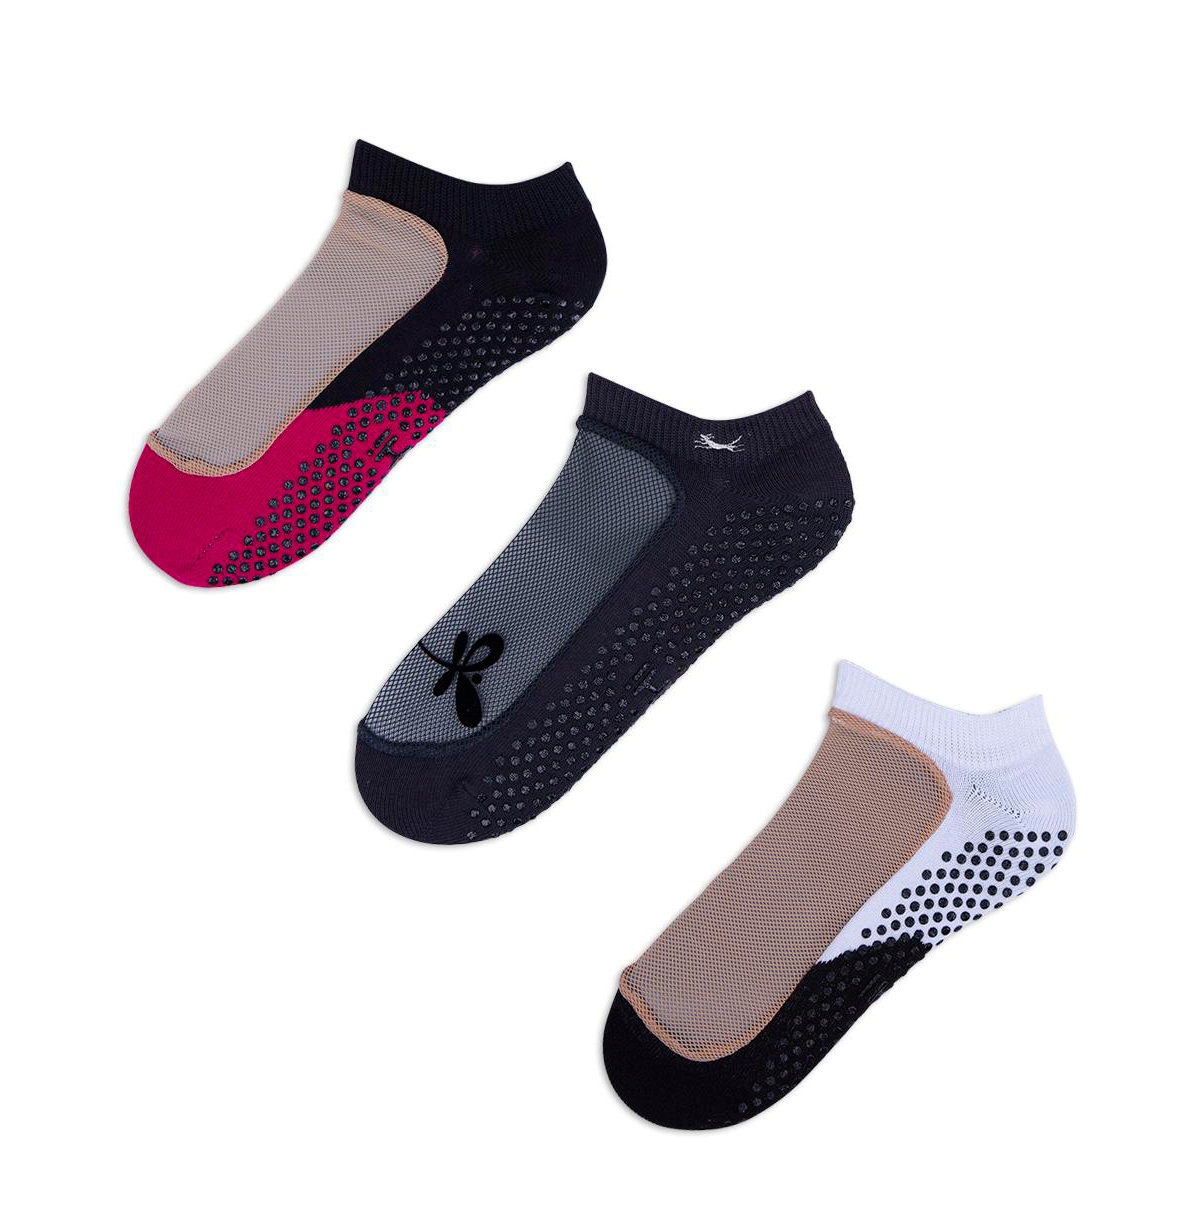 Shashi The Star Grip Pack - 3 Pack Women's Socks